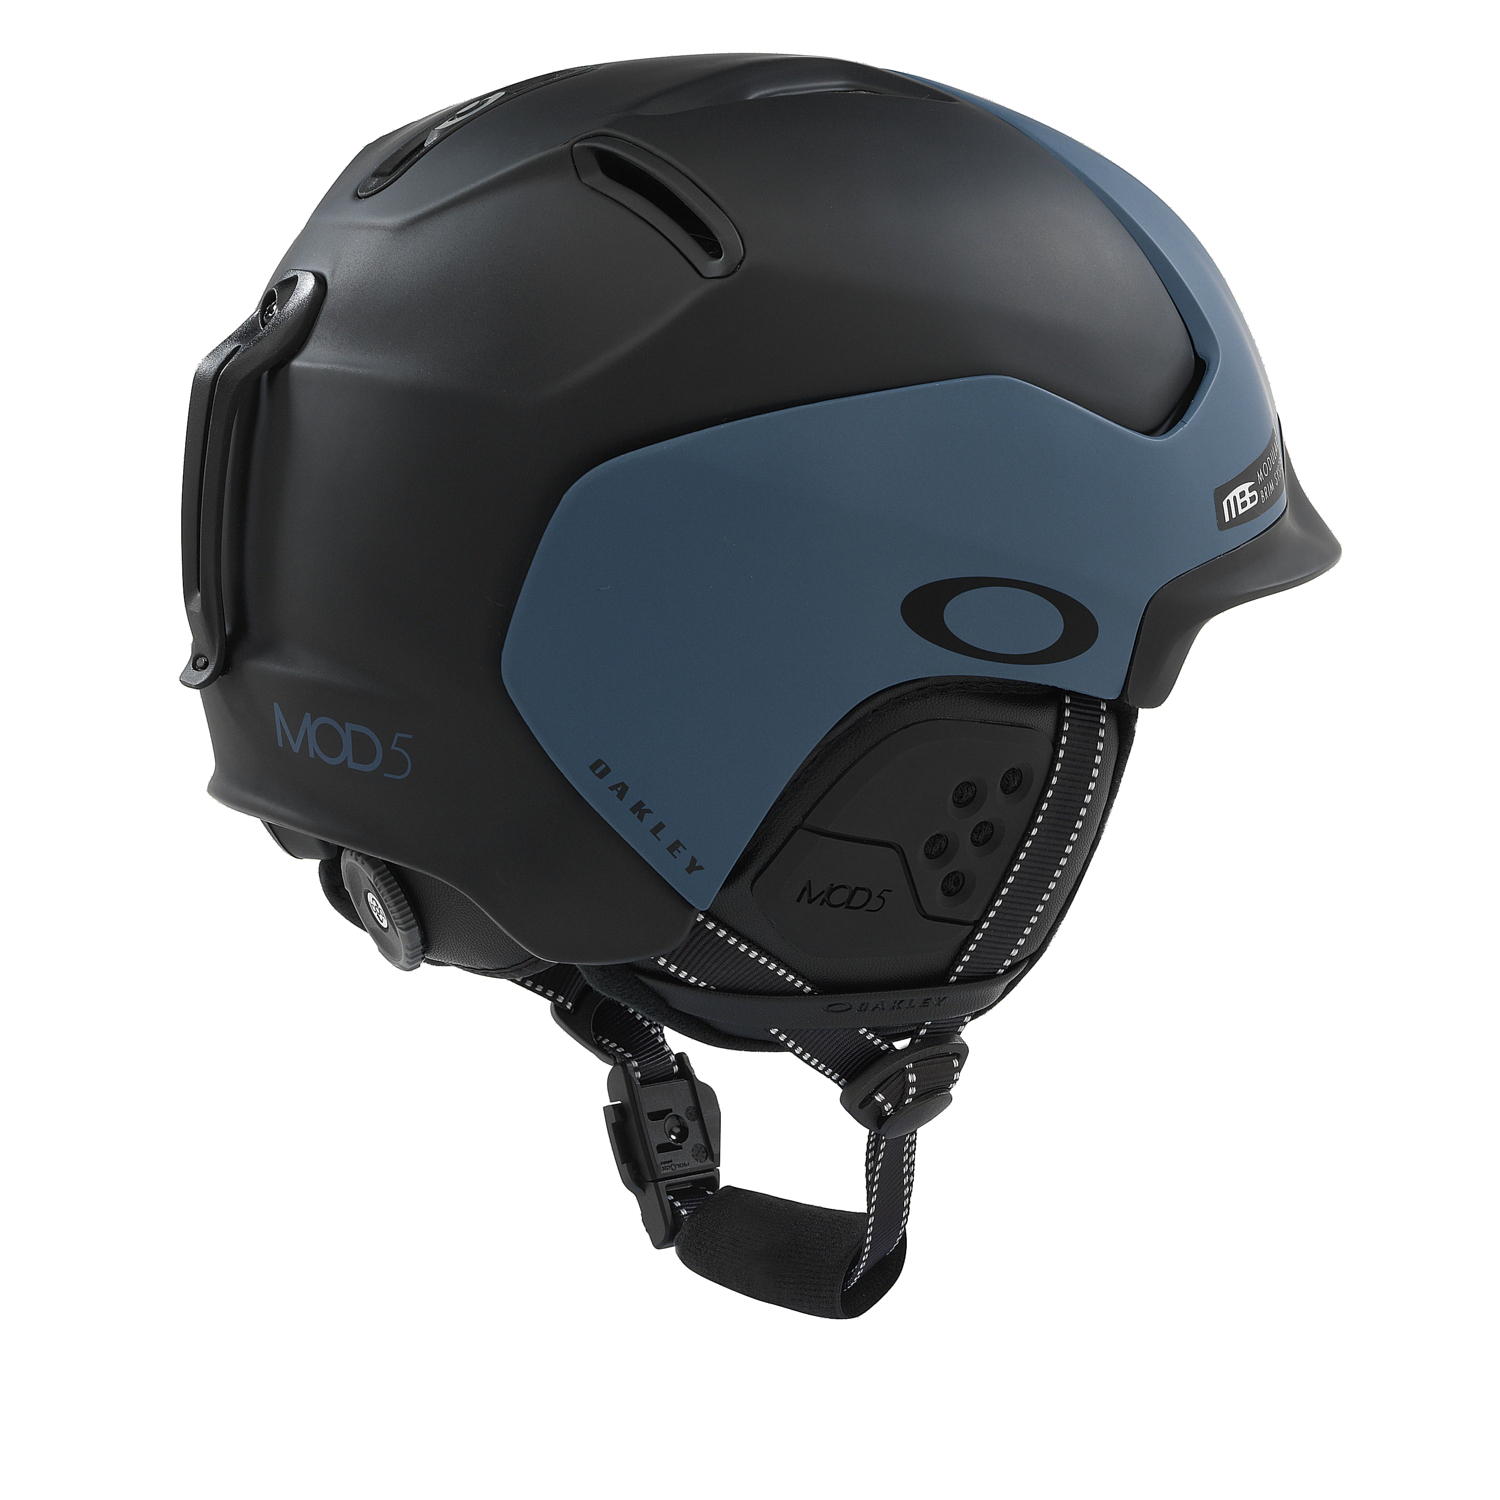 Зимний Шлем Oakley Mod5 Mips-Europe Dark Blue